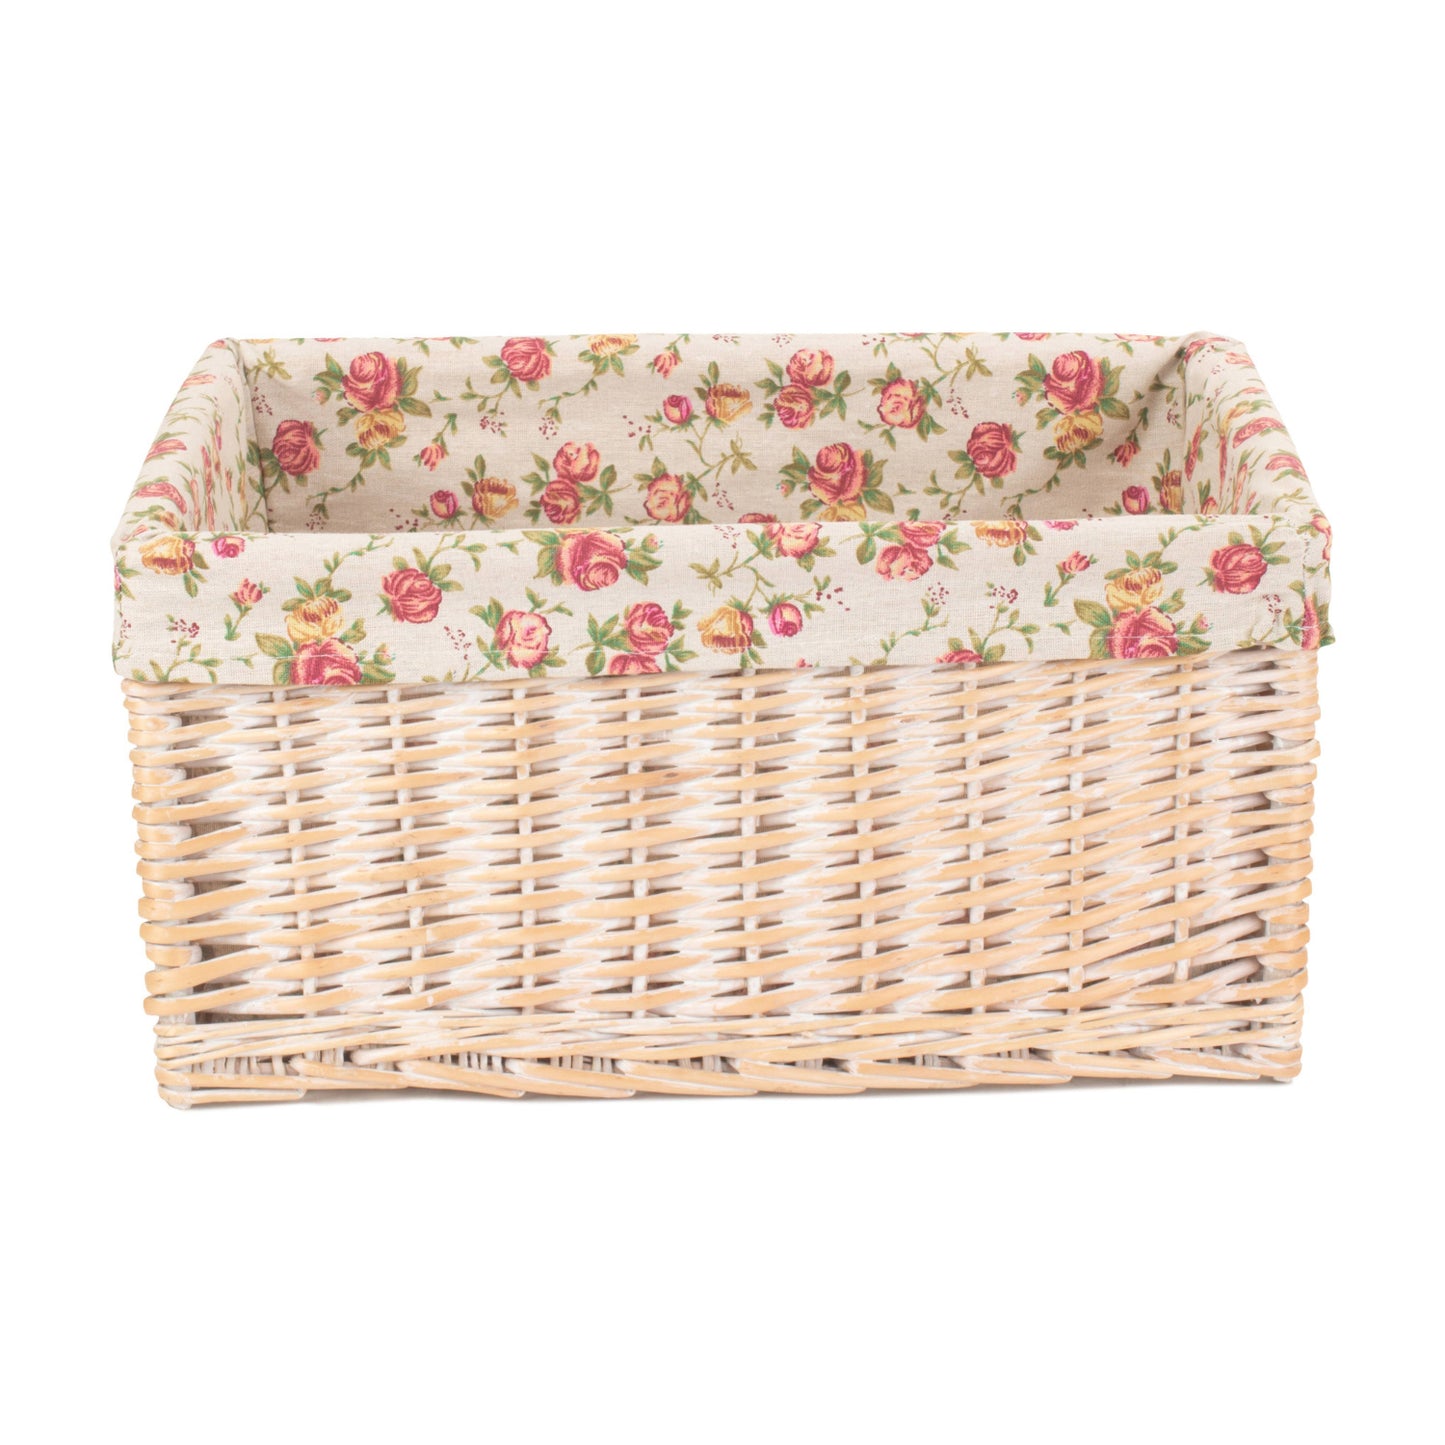 Extra Large White Wash Storage Basket With Garden Rose Lining